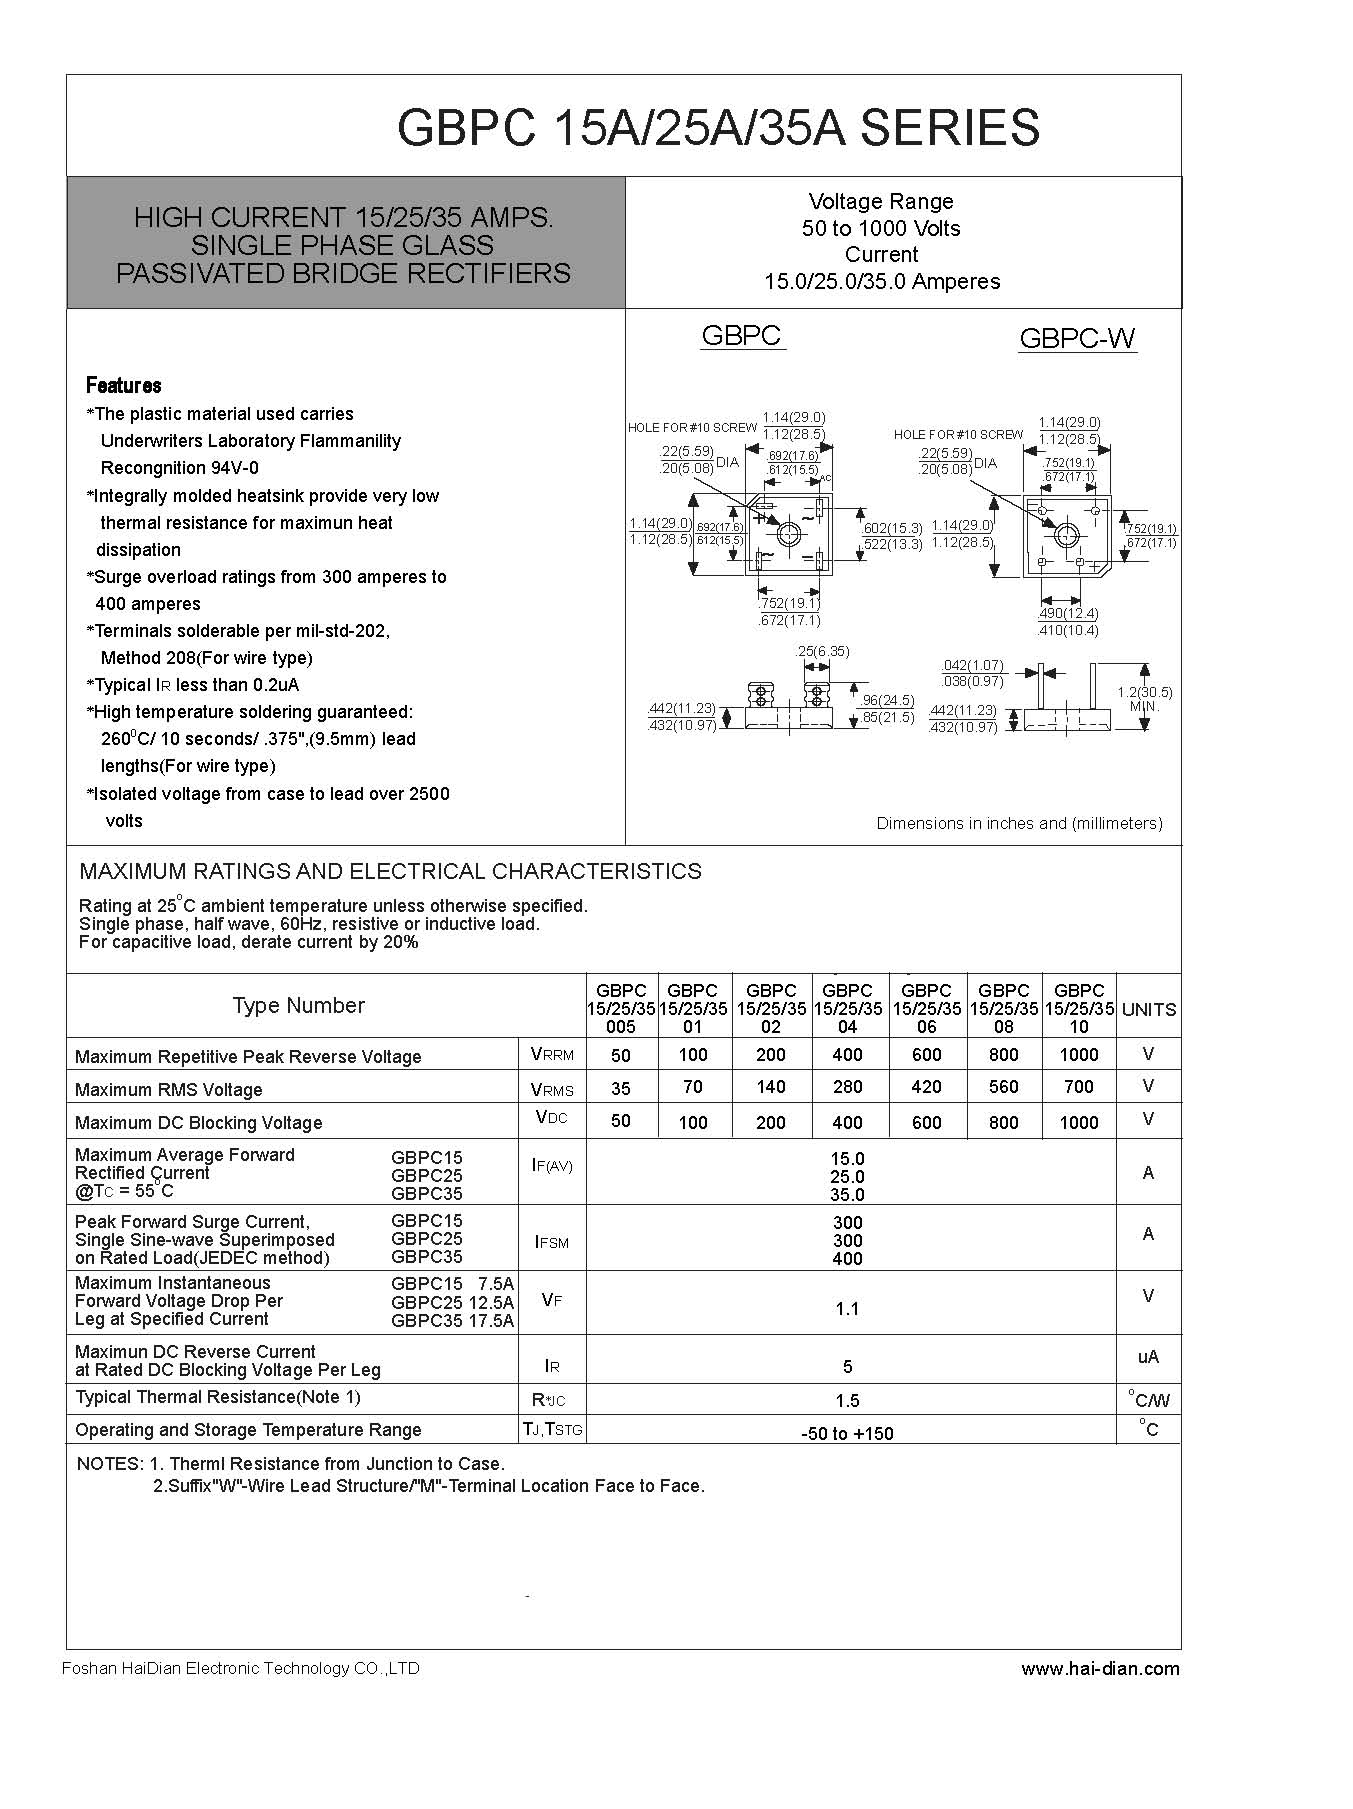 GBPC3510桥式整流器(整流桥堆)-- 佛山海电电子科技有限公司